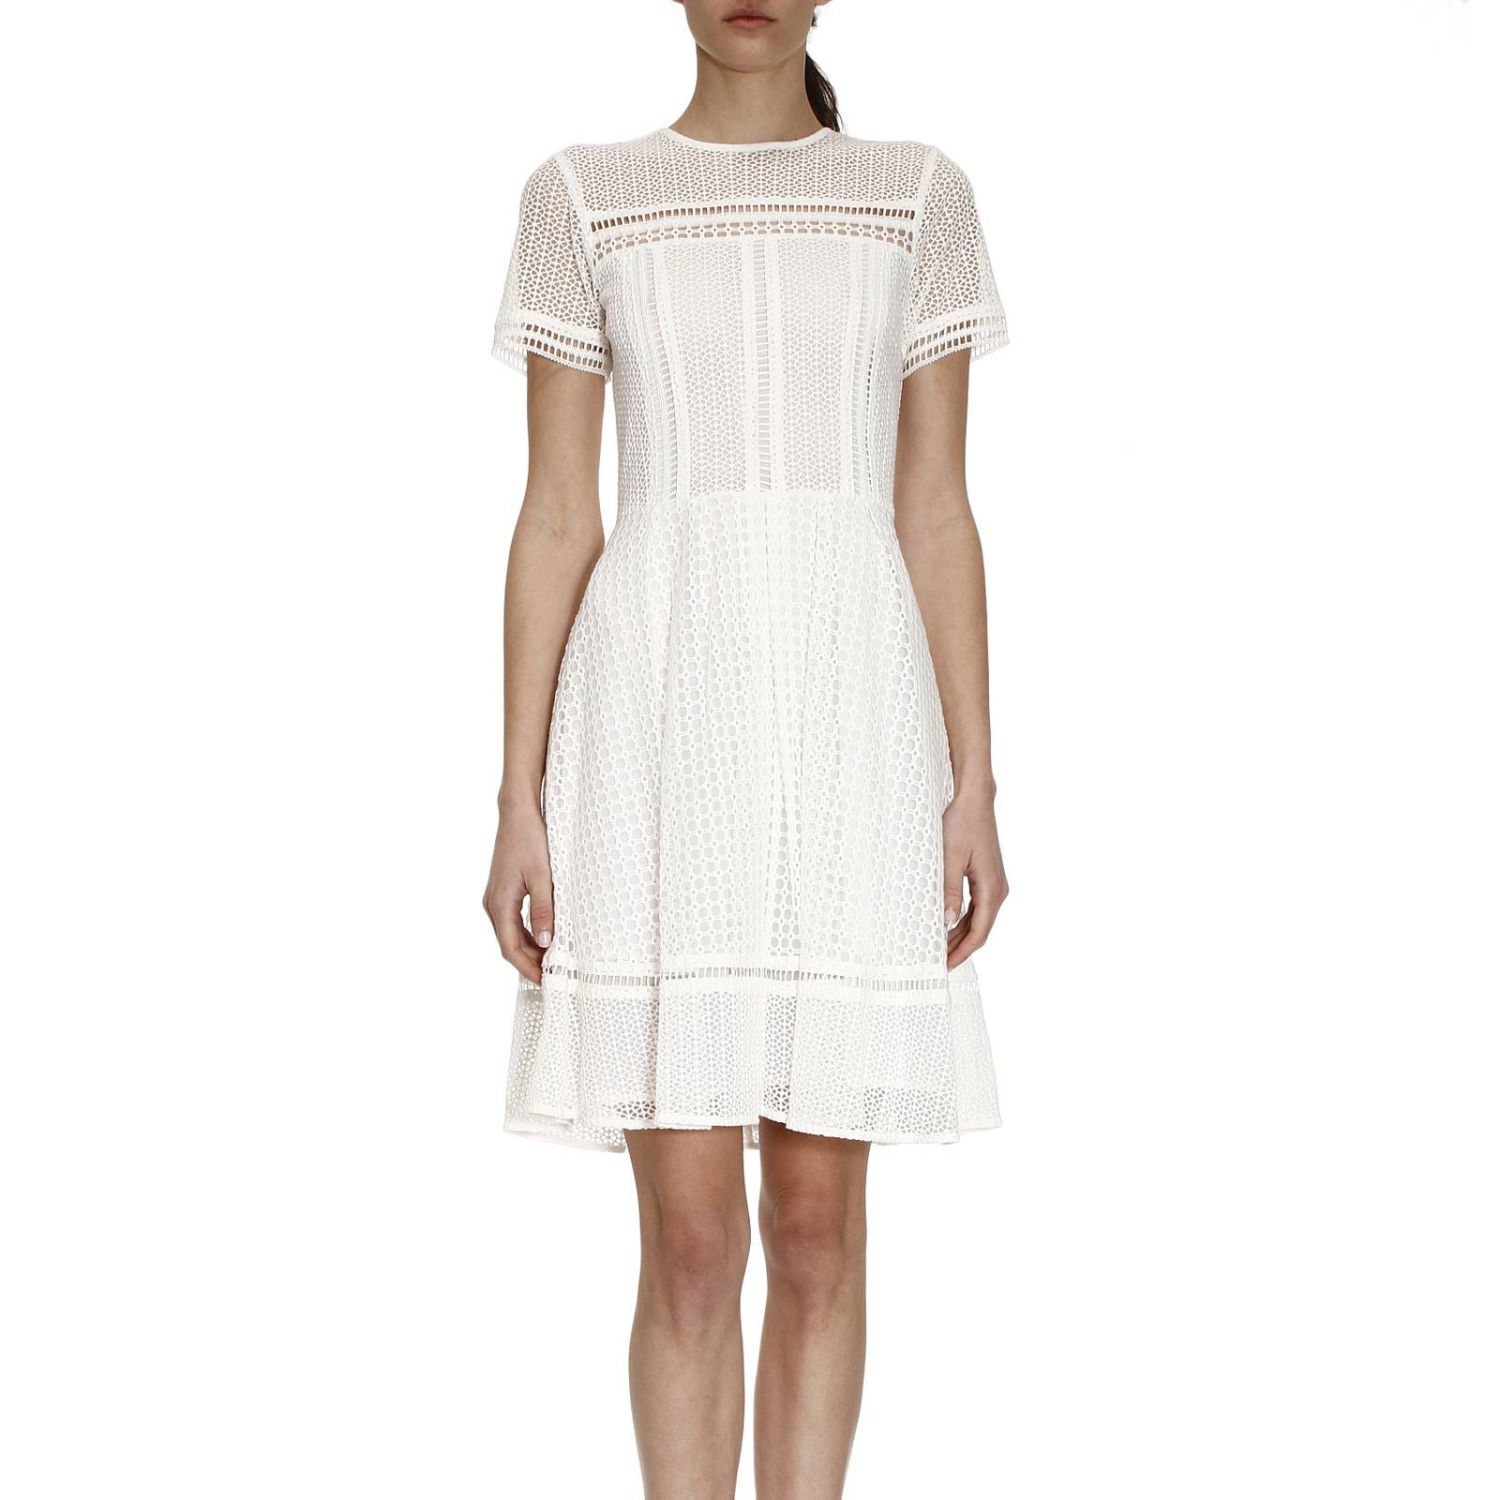 michael kors white dress